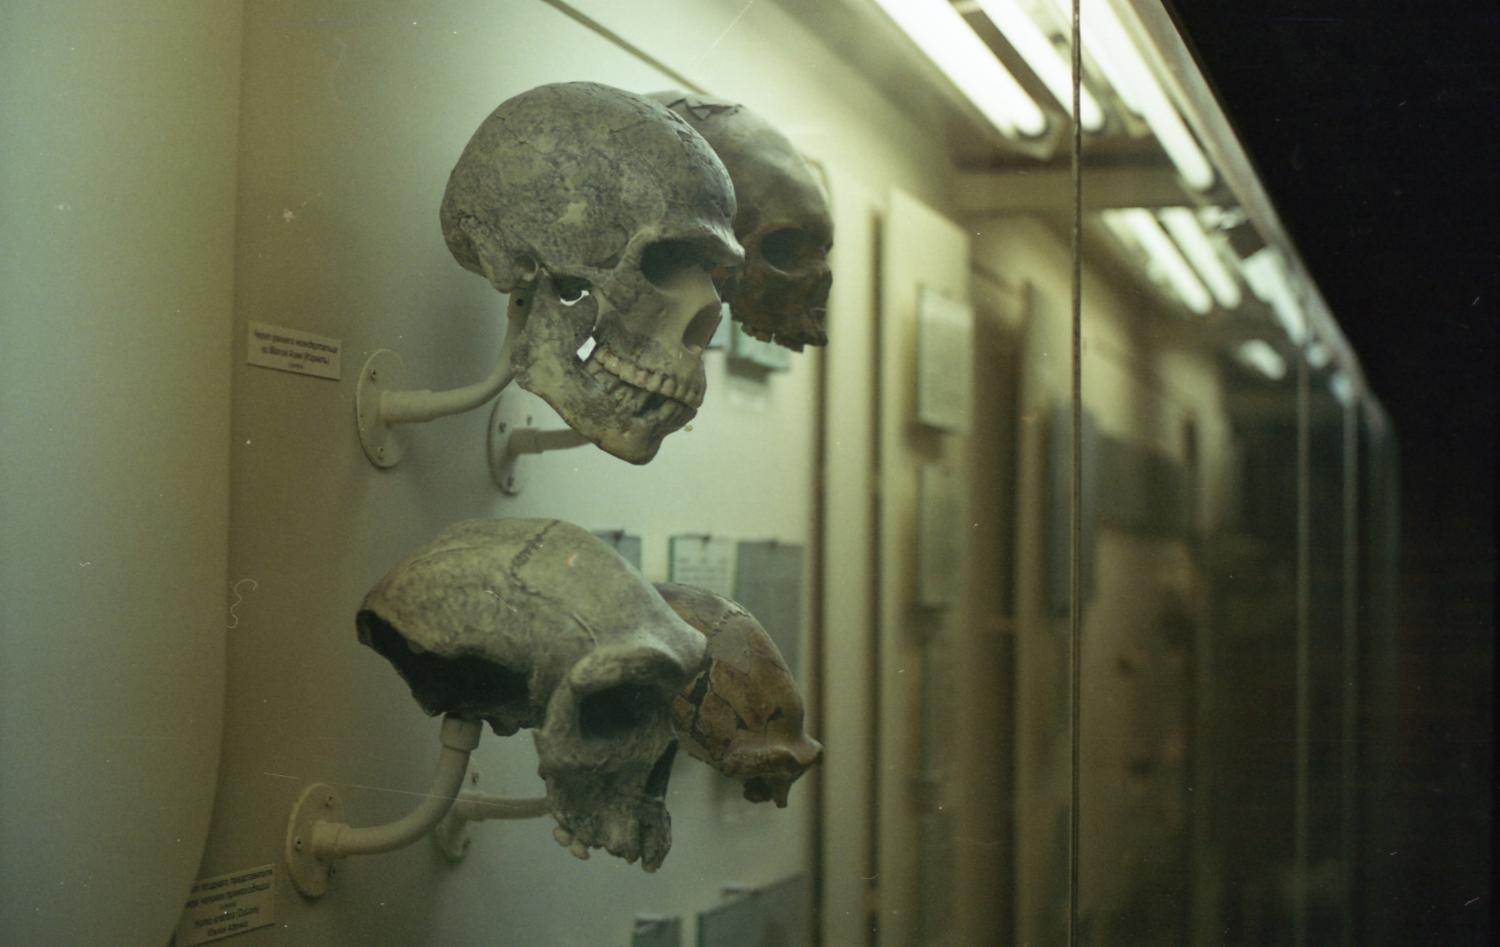 Museum skulls